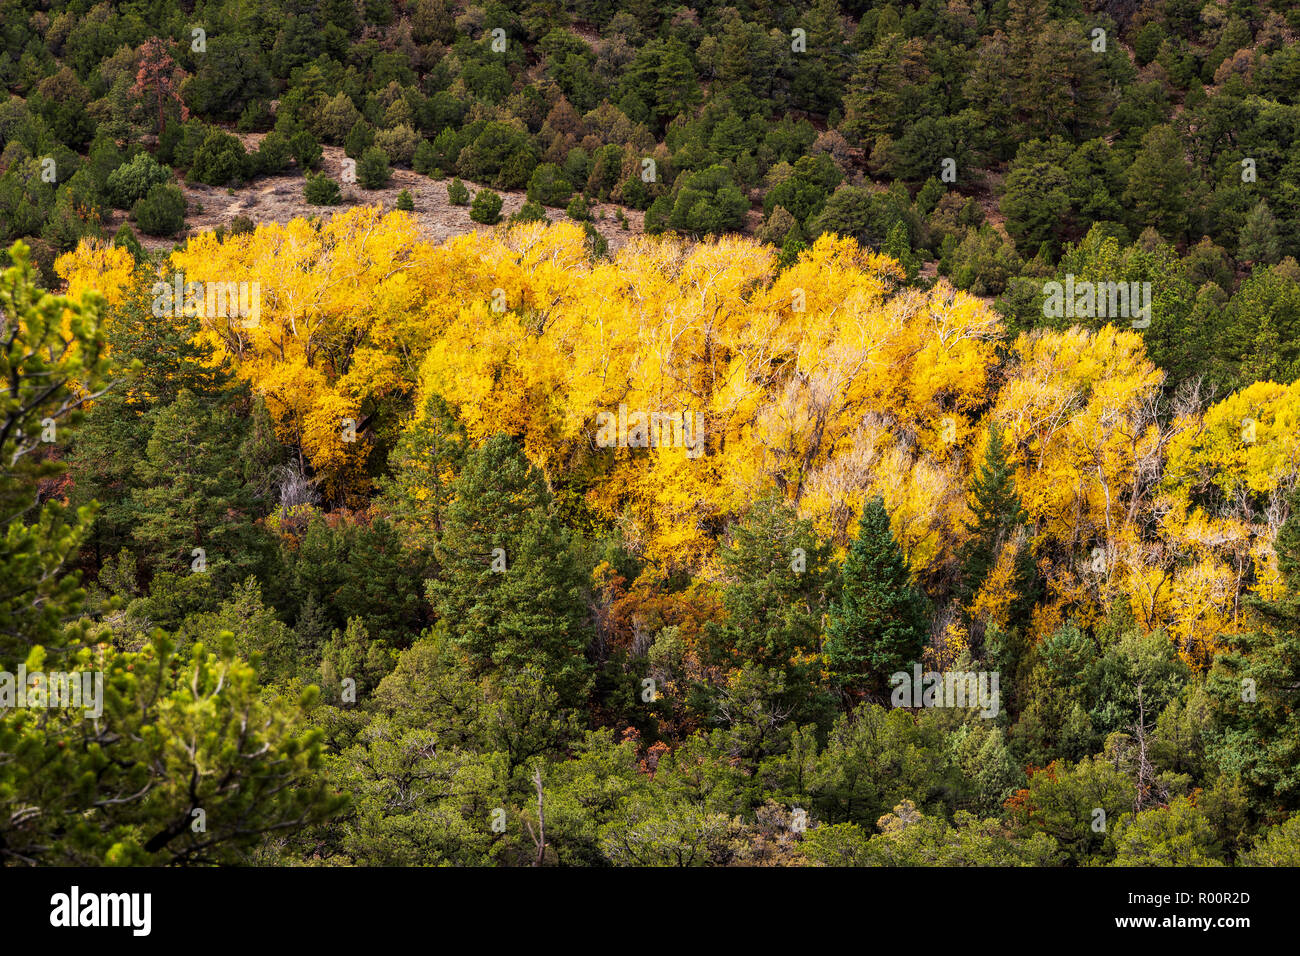 Aspen trees in autumn show golden leaf color; central Colorado; USA Stock Photo